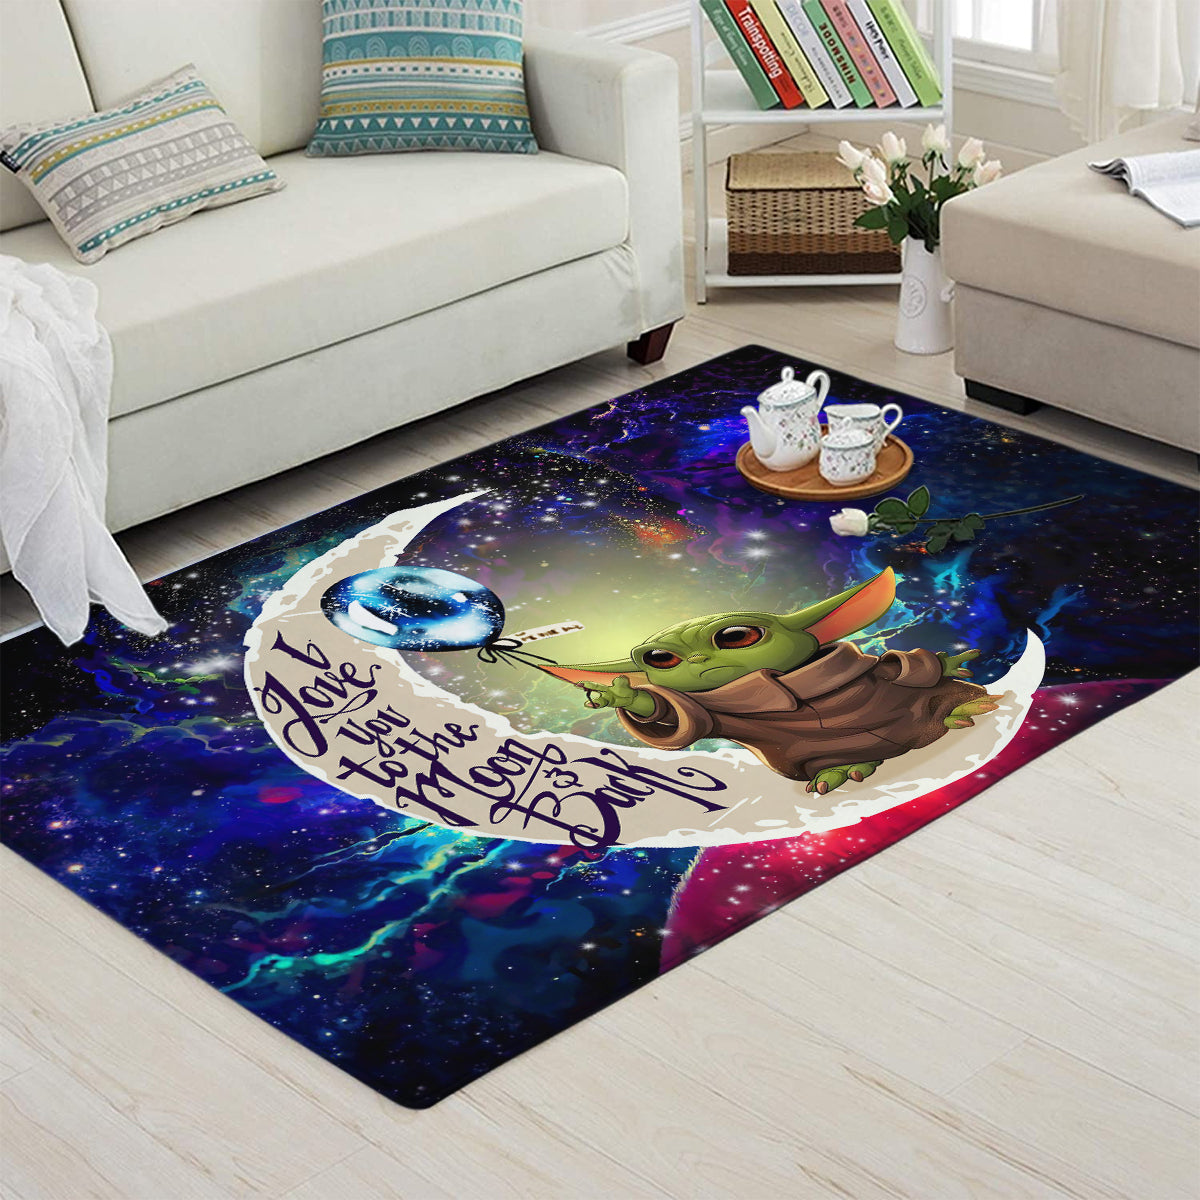 Baby Yoda Love You To The Moon Galaxy Carpet Rug Home Room Decor